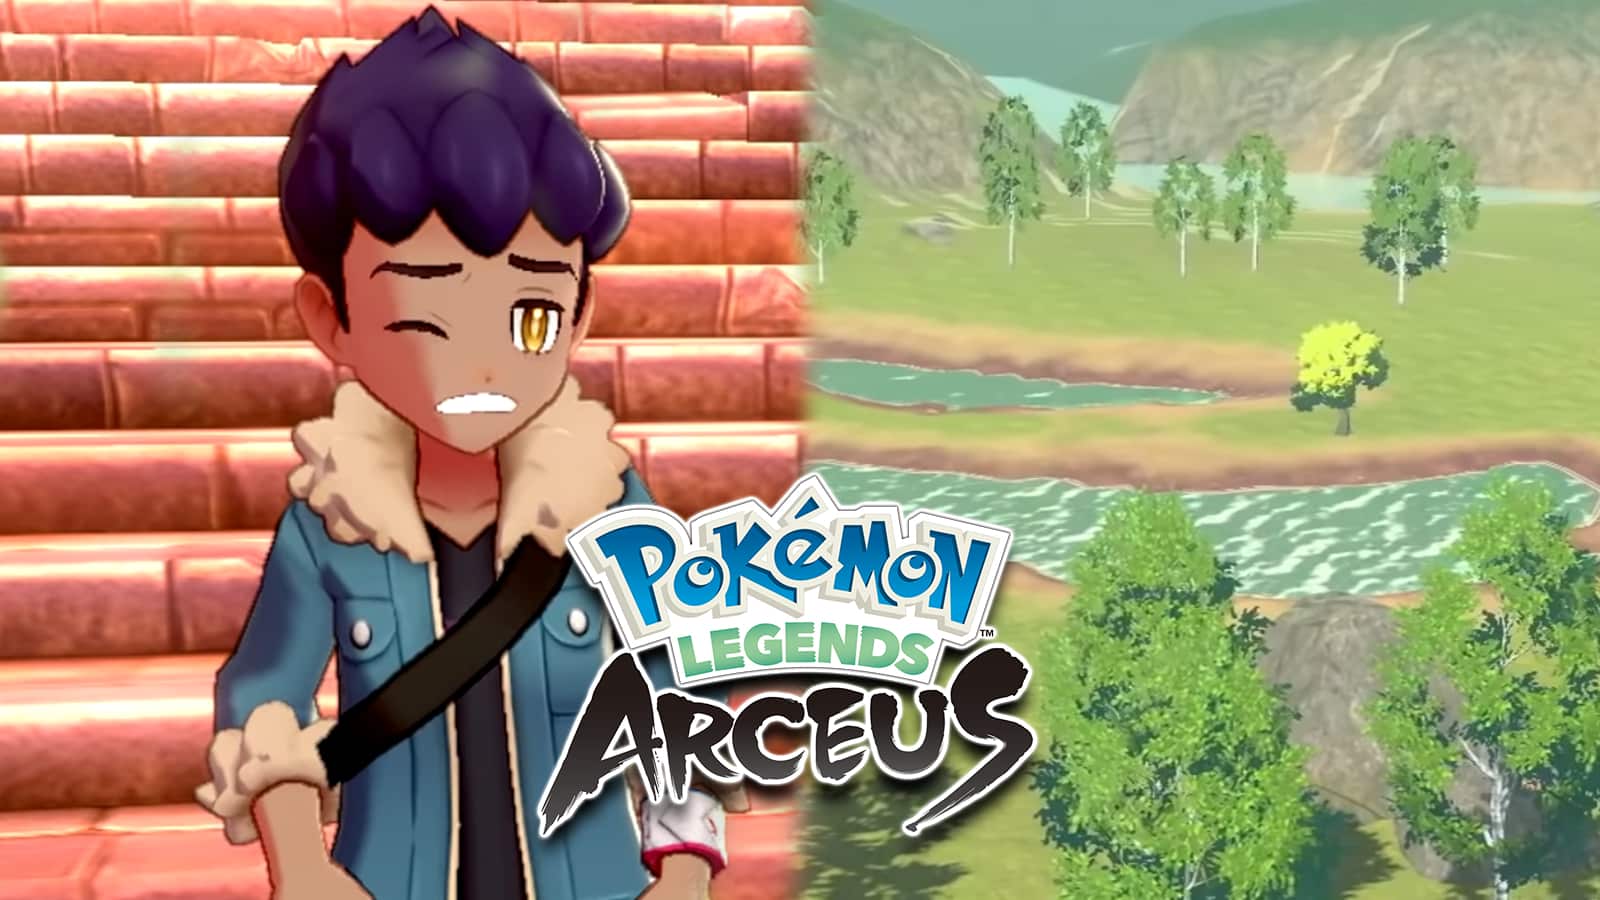 Pokémon Legends: Arceus Mobile Android Game Full Setup APK Download